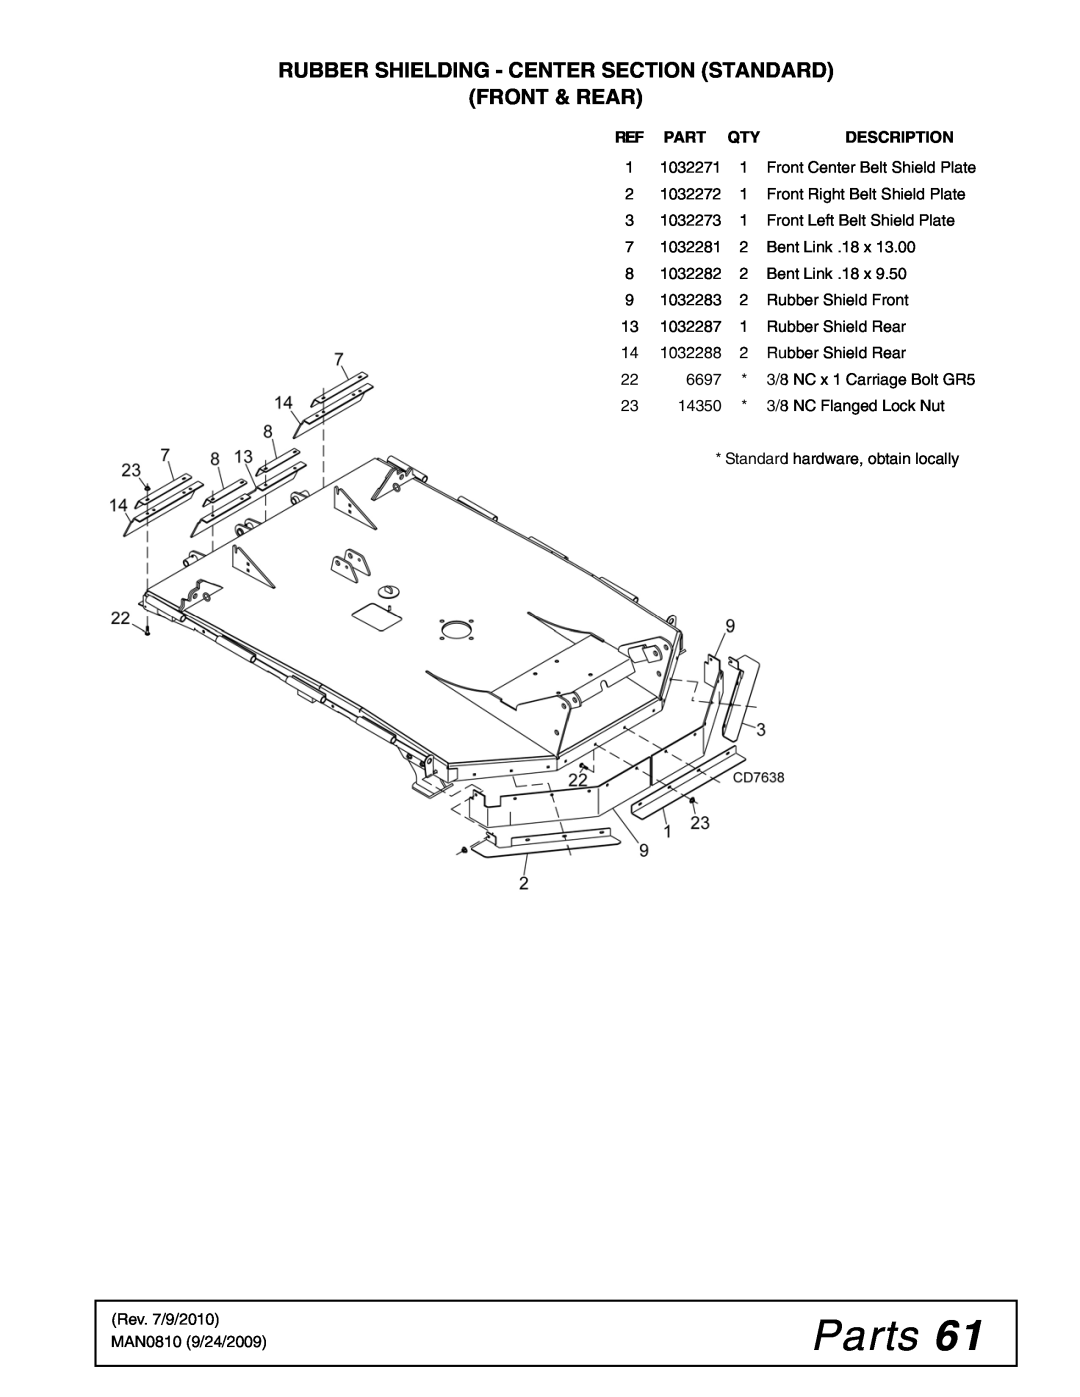 Woods Equipment BW15LH manual Parts, Rubber Shielding - Center Section Standard, Front & Rear, Description 